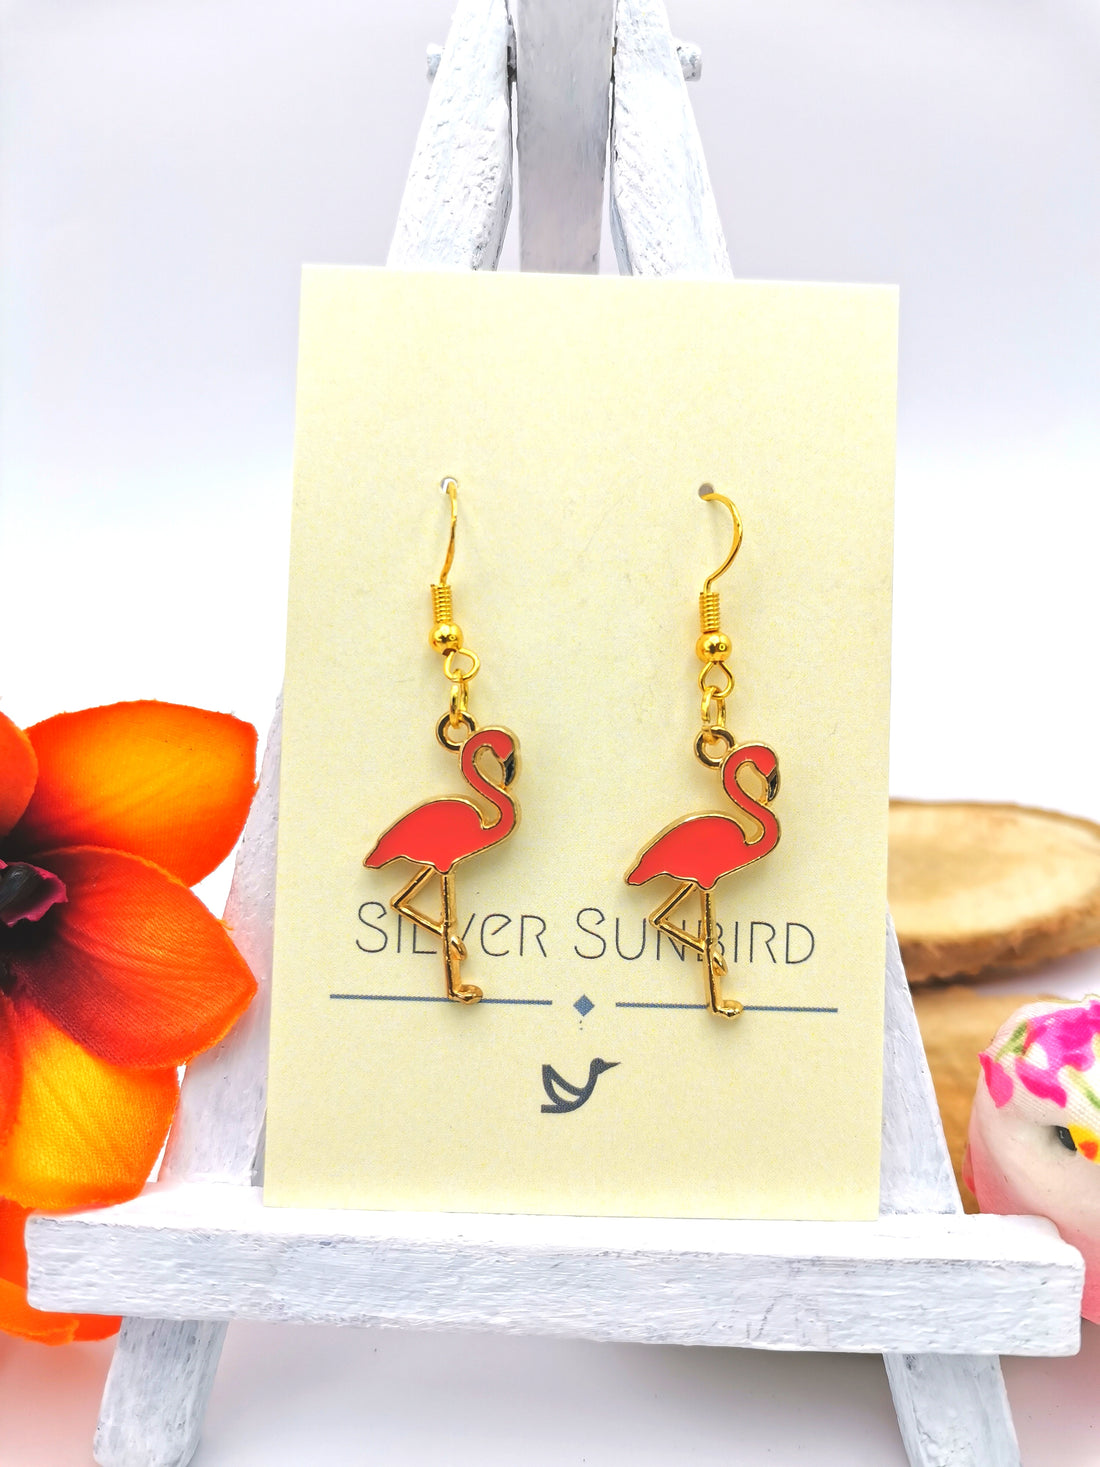 Dancing Flamingo Earrings - Silver Sunbird animal earrings